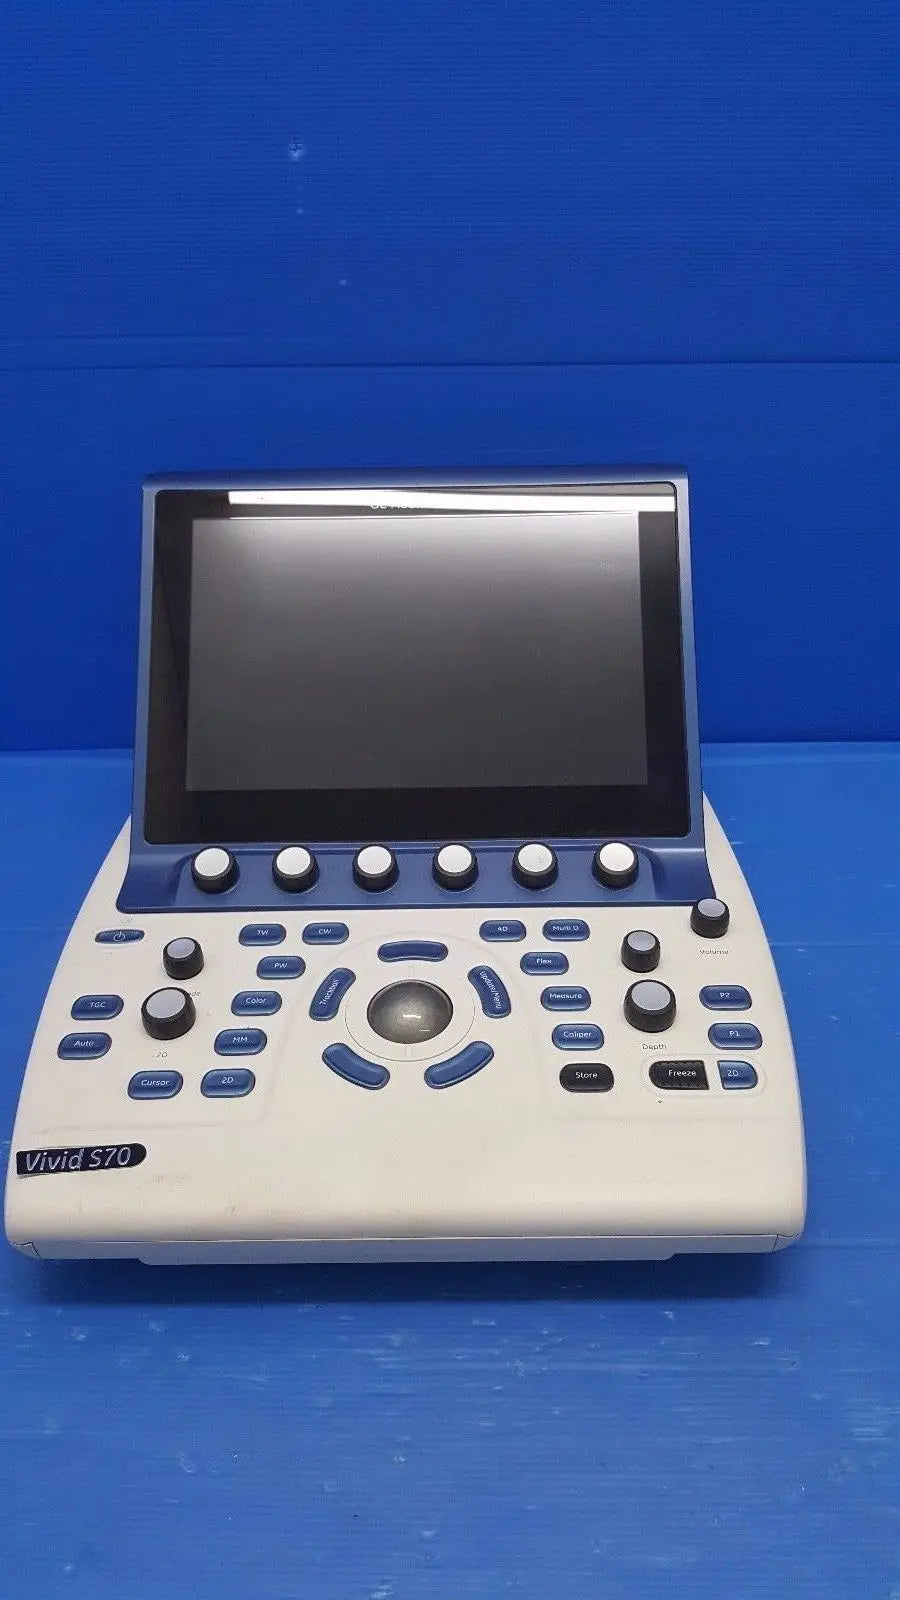 GE Healthcare Vivid S70 Ultrasound system P/N 5439674 DIAGNOSTIC ULTRASOUND MACHINES FOR SALE